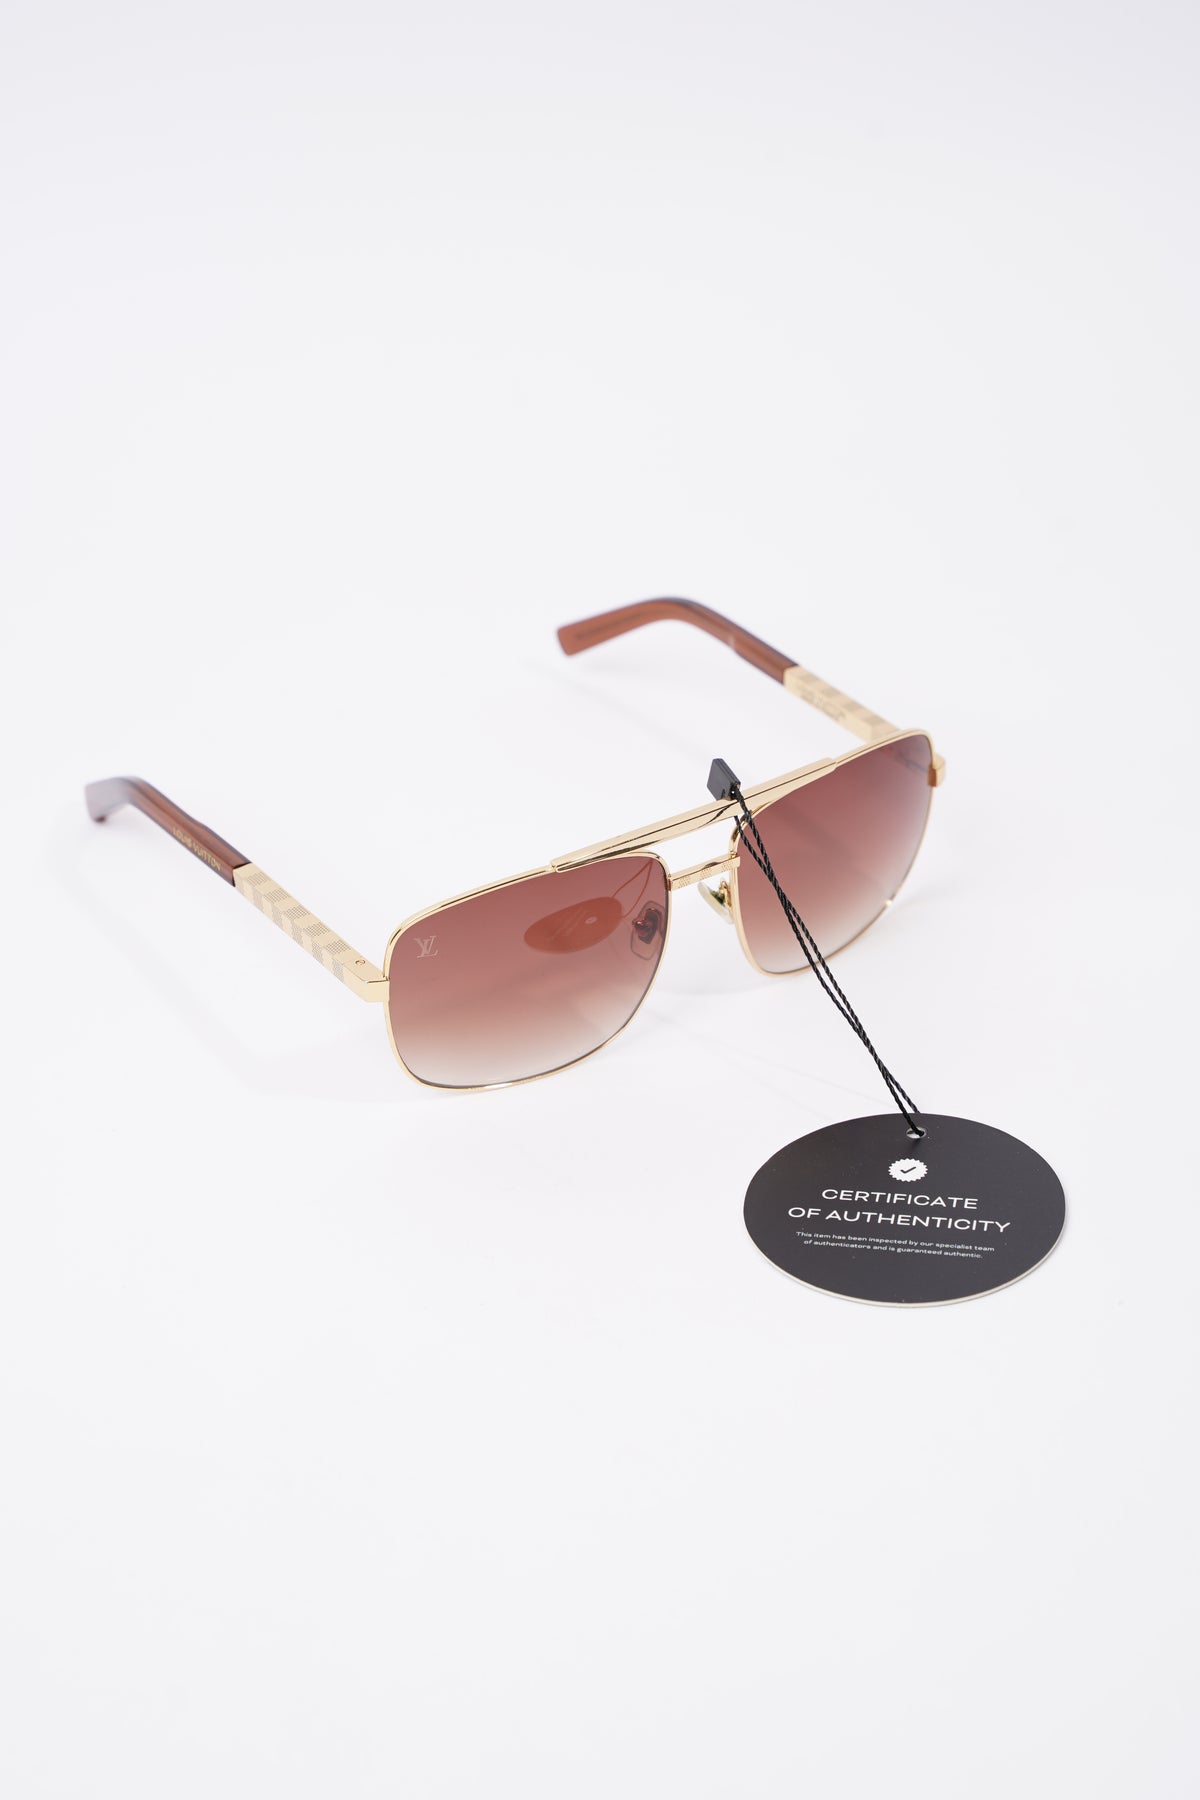 Louis Vuitton, Accessories, Louis Vuitton Attitude Sunglasses Gold